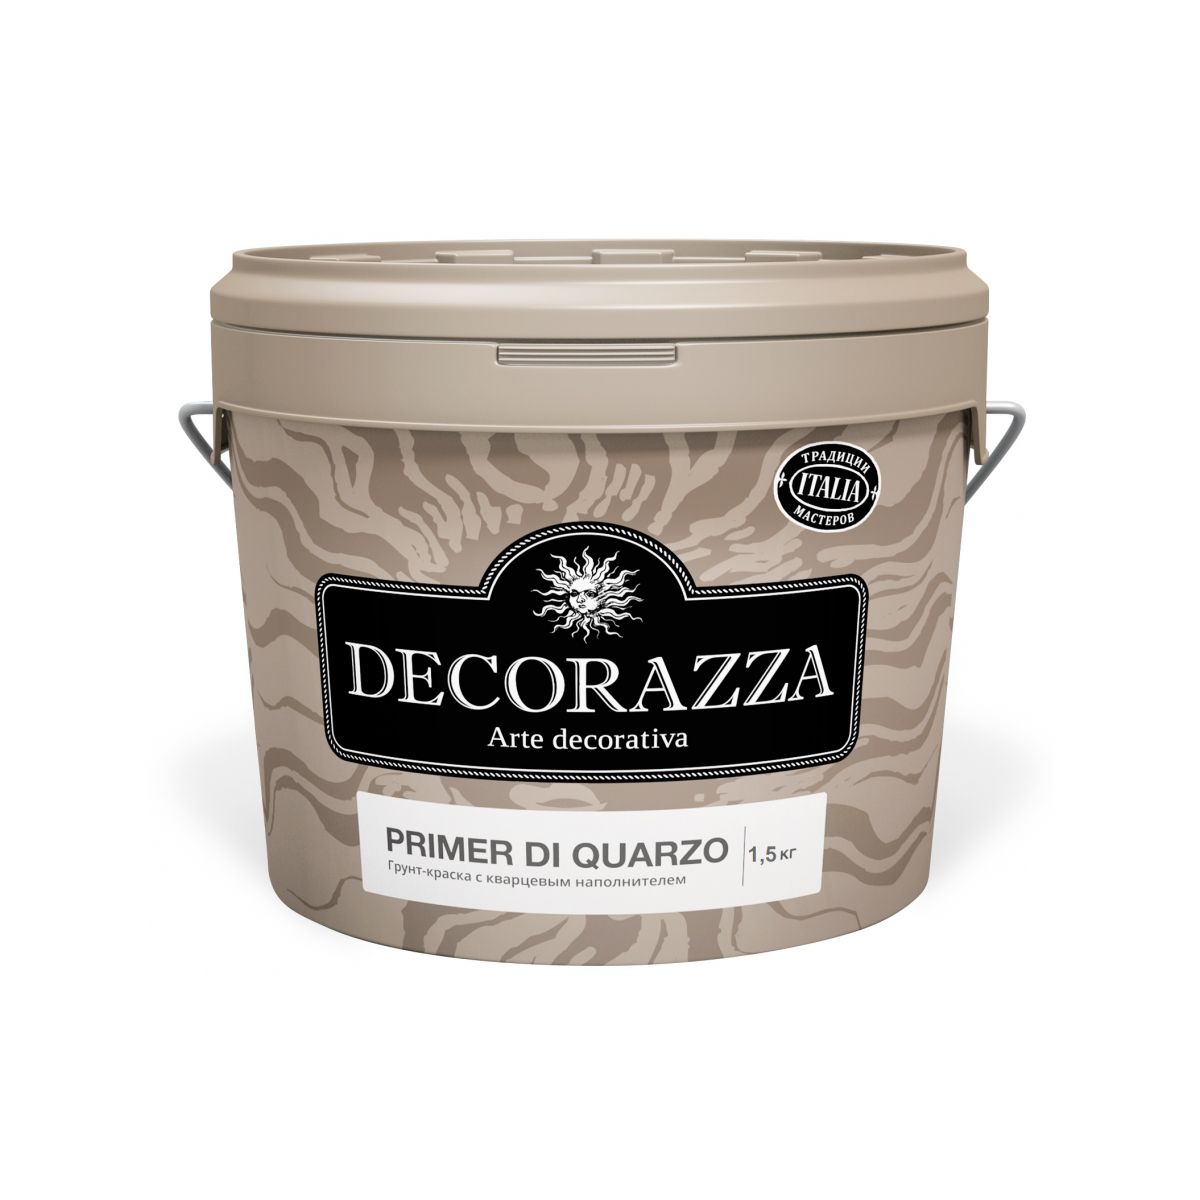 Грунт-краска Decorazza Primer di Quarzo, 1,5 кг краска decorazza lucetezza nova lcn 001 5 л